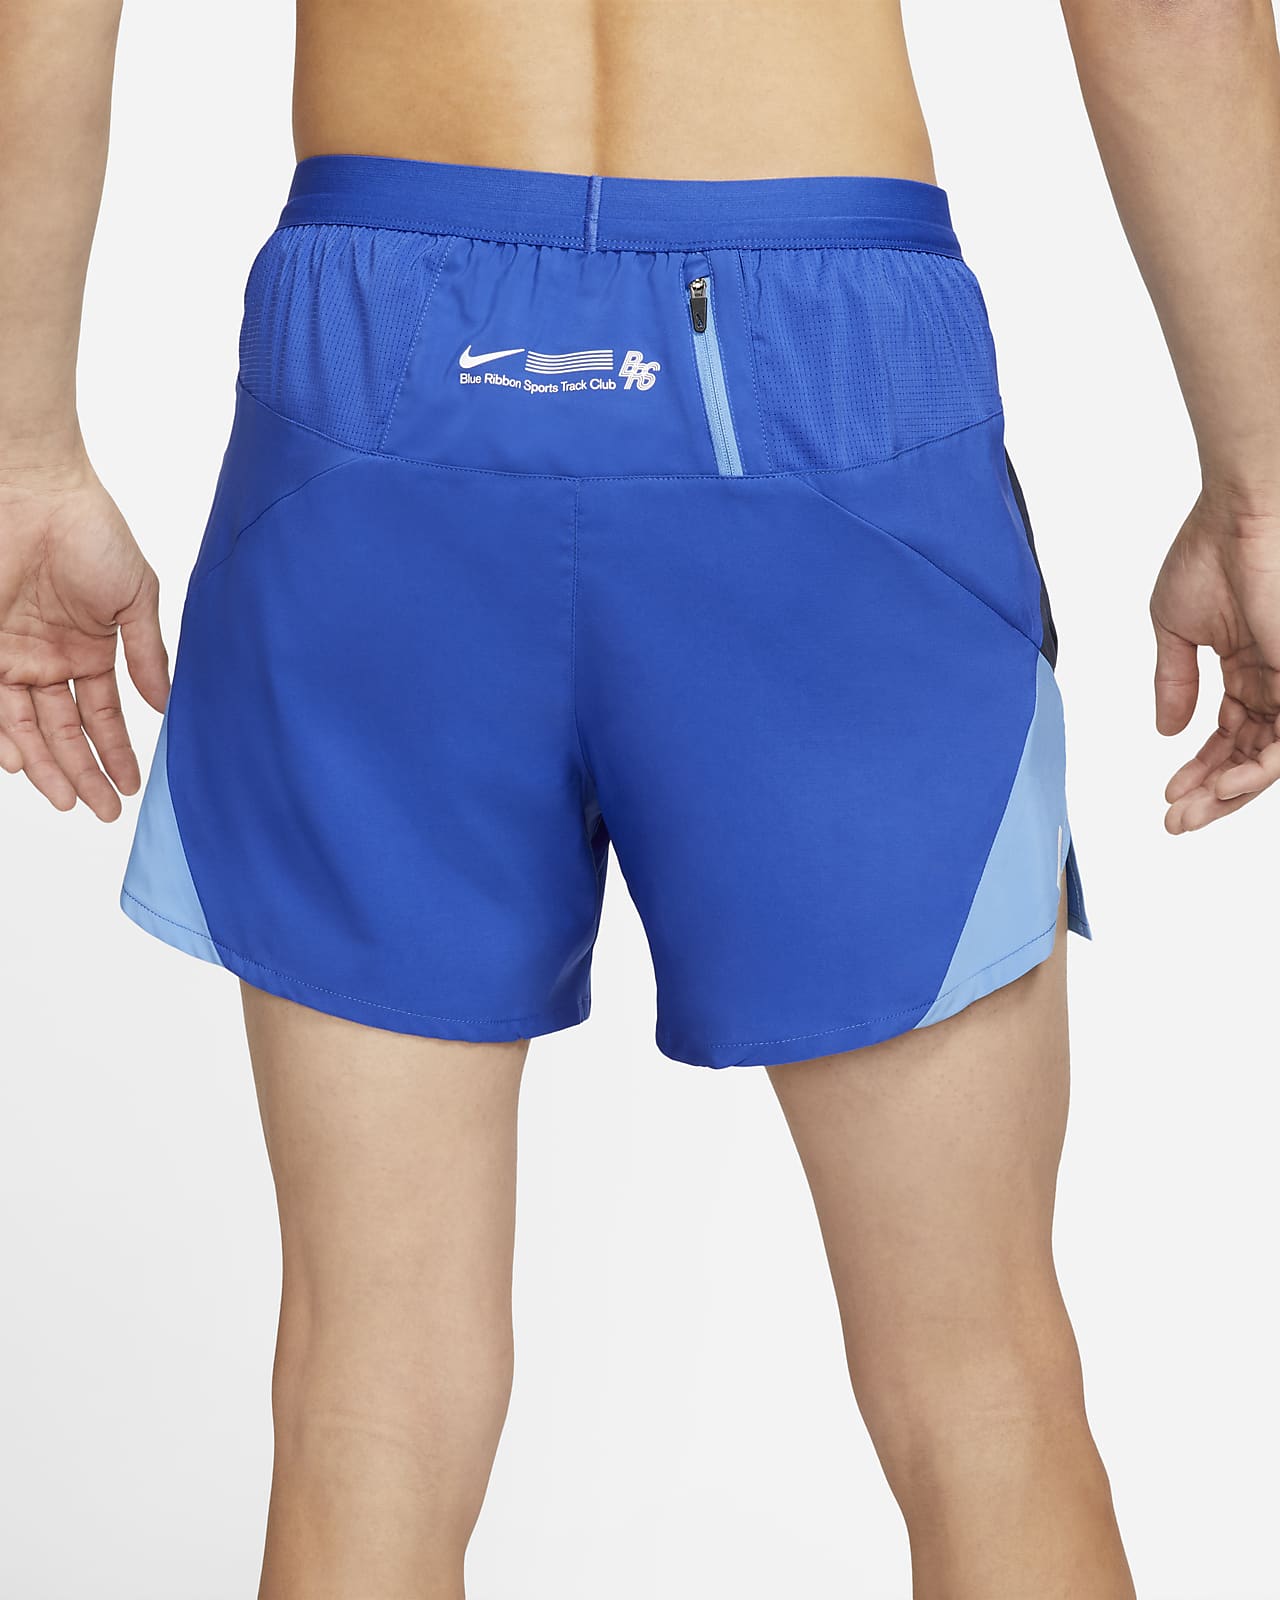 nike flex shorts thunder blue